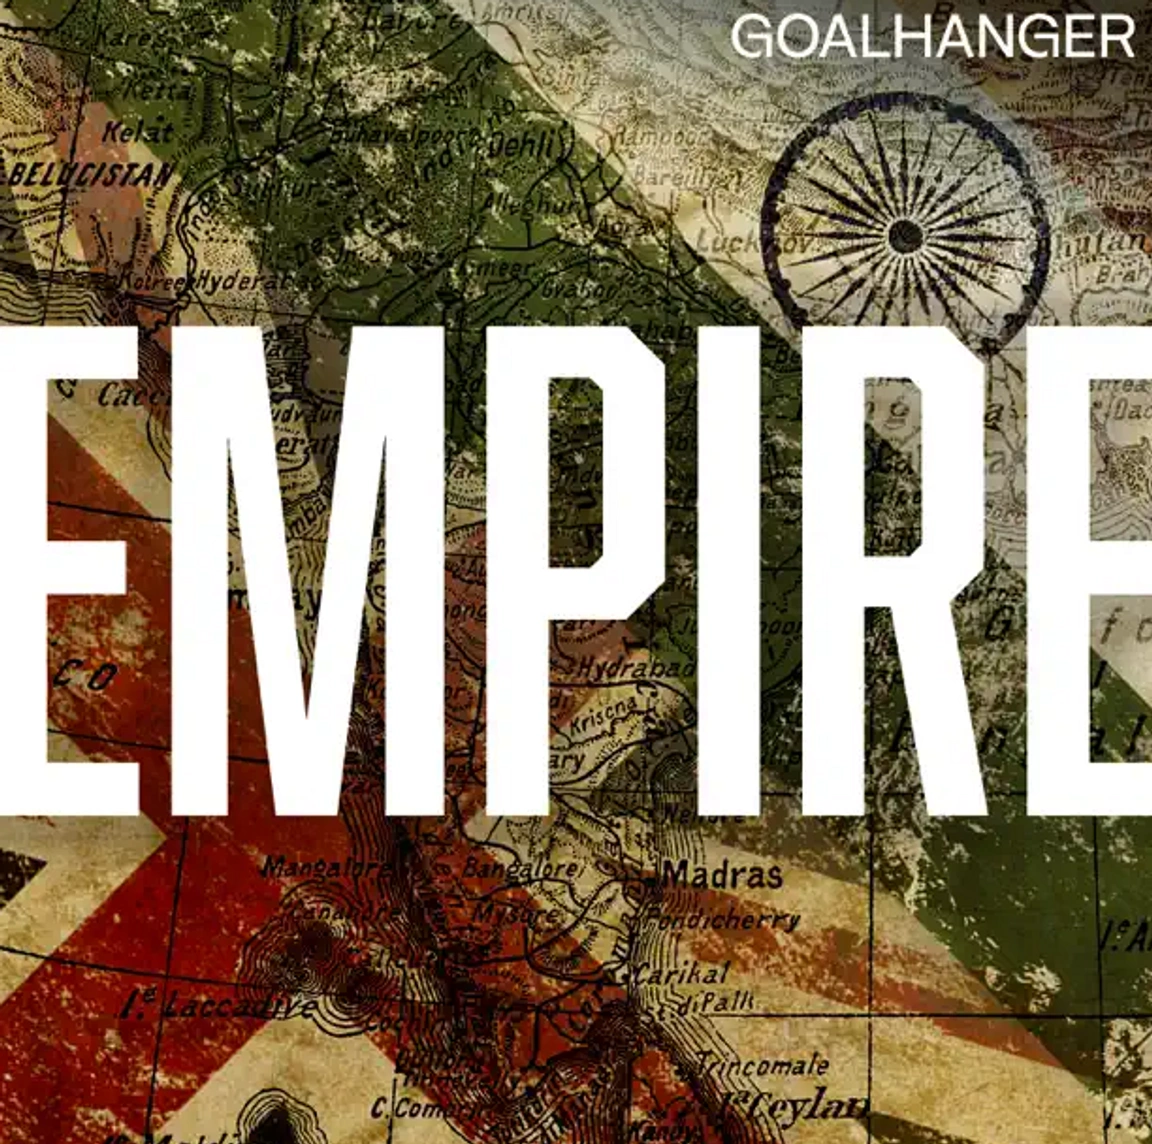 Empire Podcast